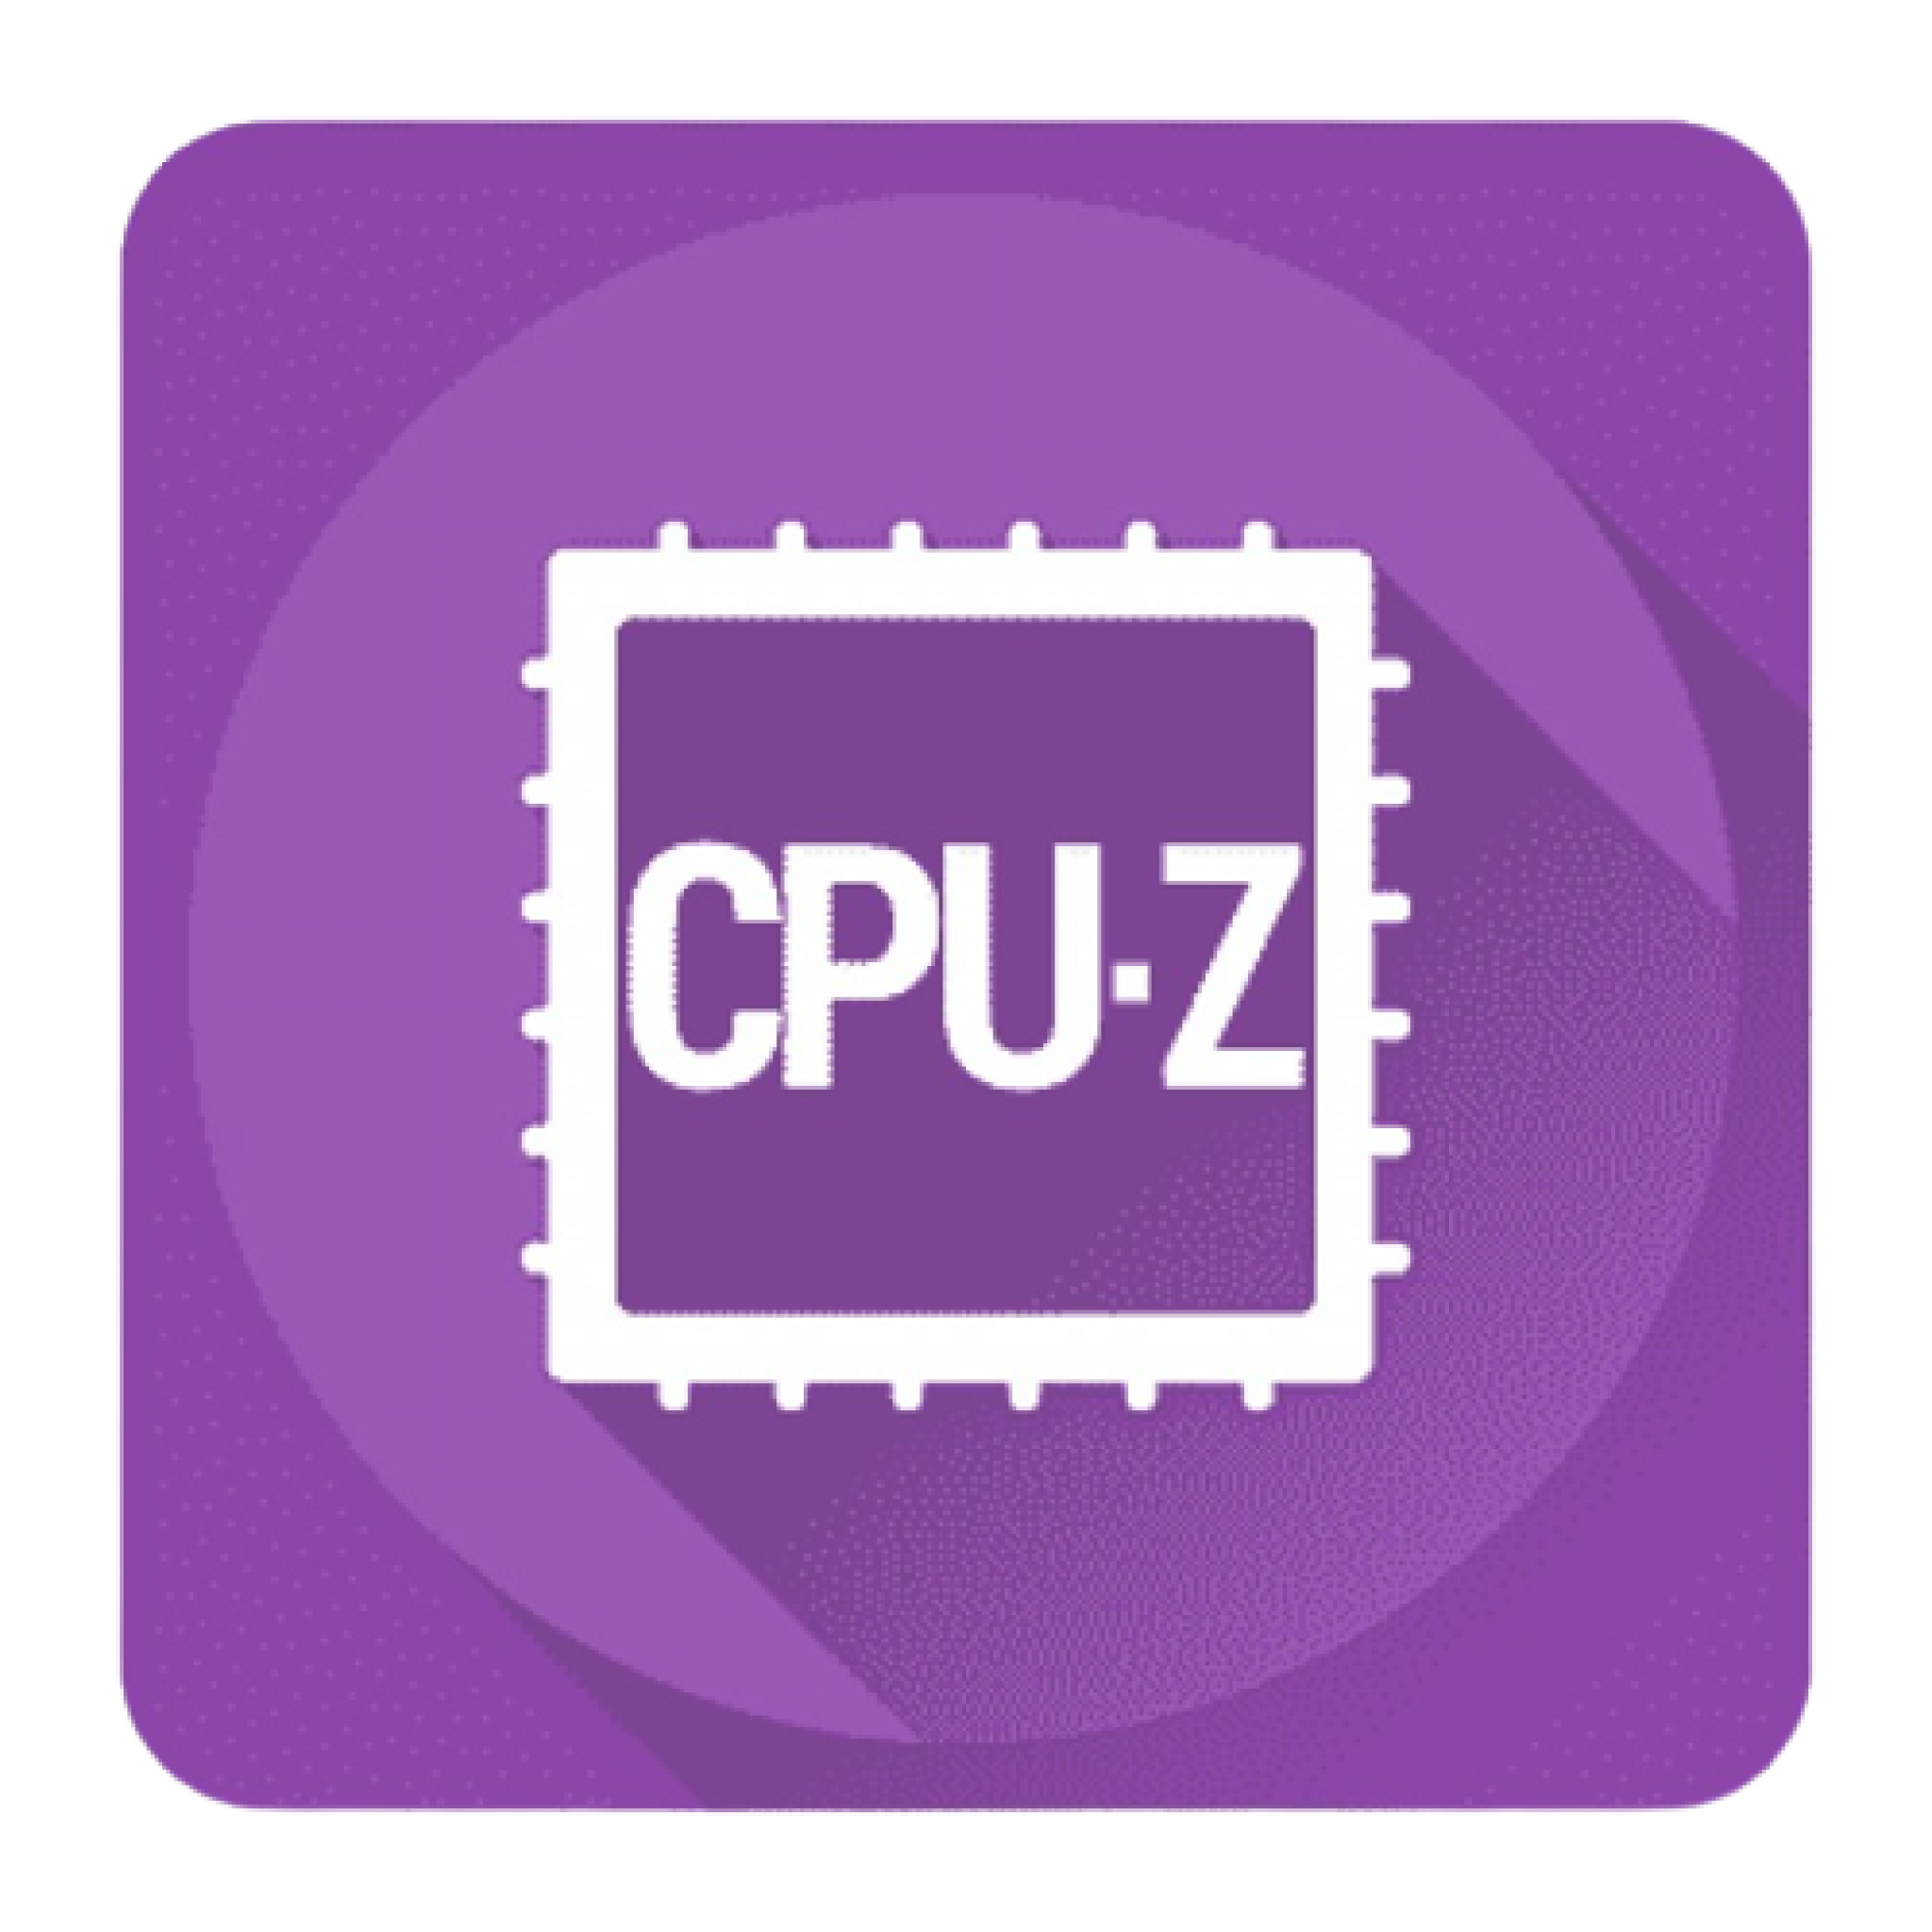 Cpu z бесплатное. CPU-Z иконка. CPU Z ярлык. CPU Z русская версия. CPUID CPU-Z.